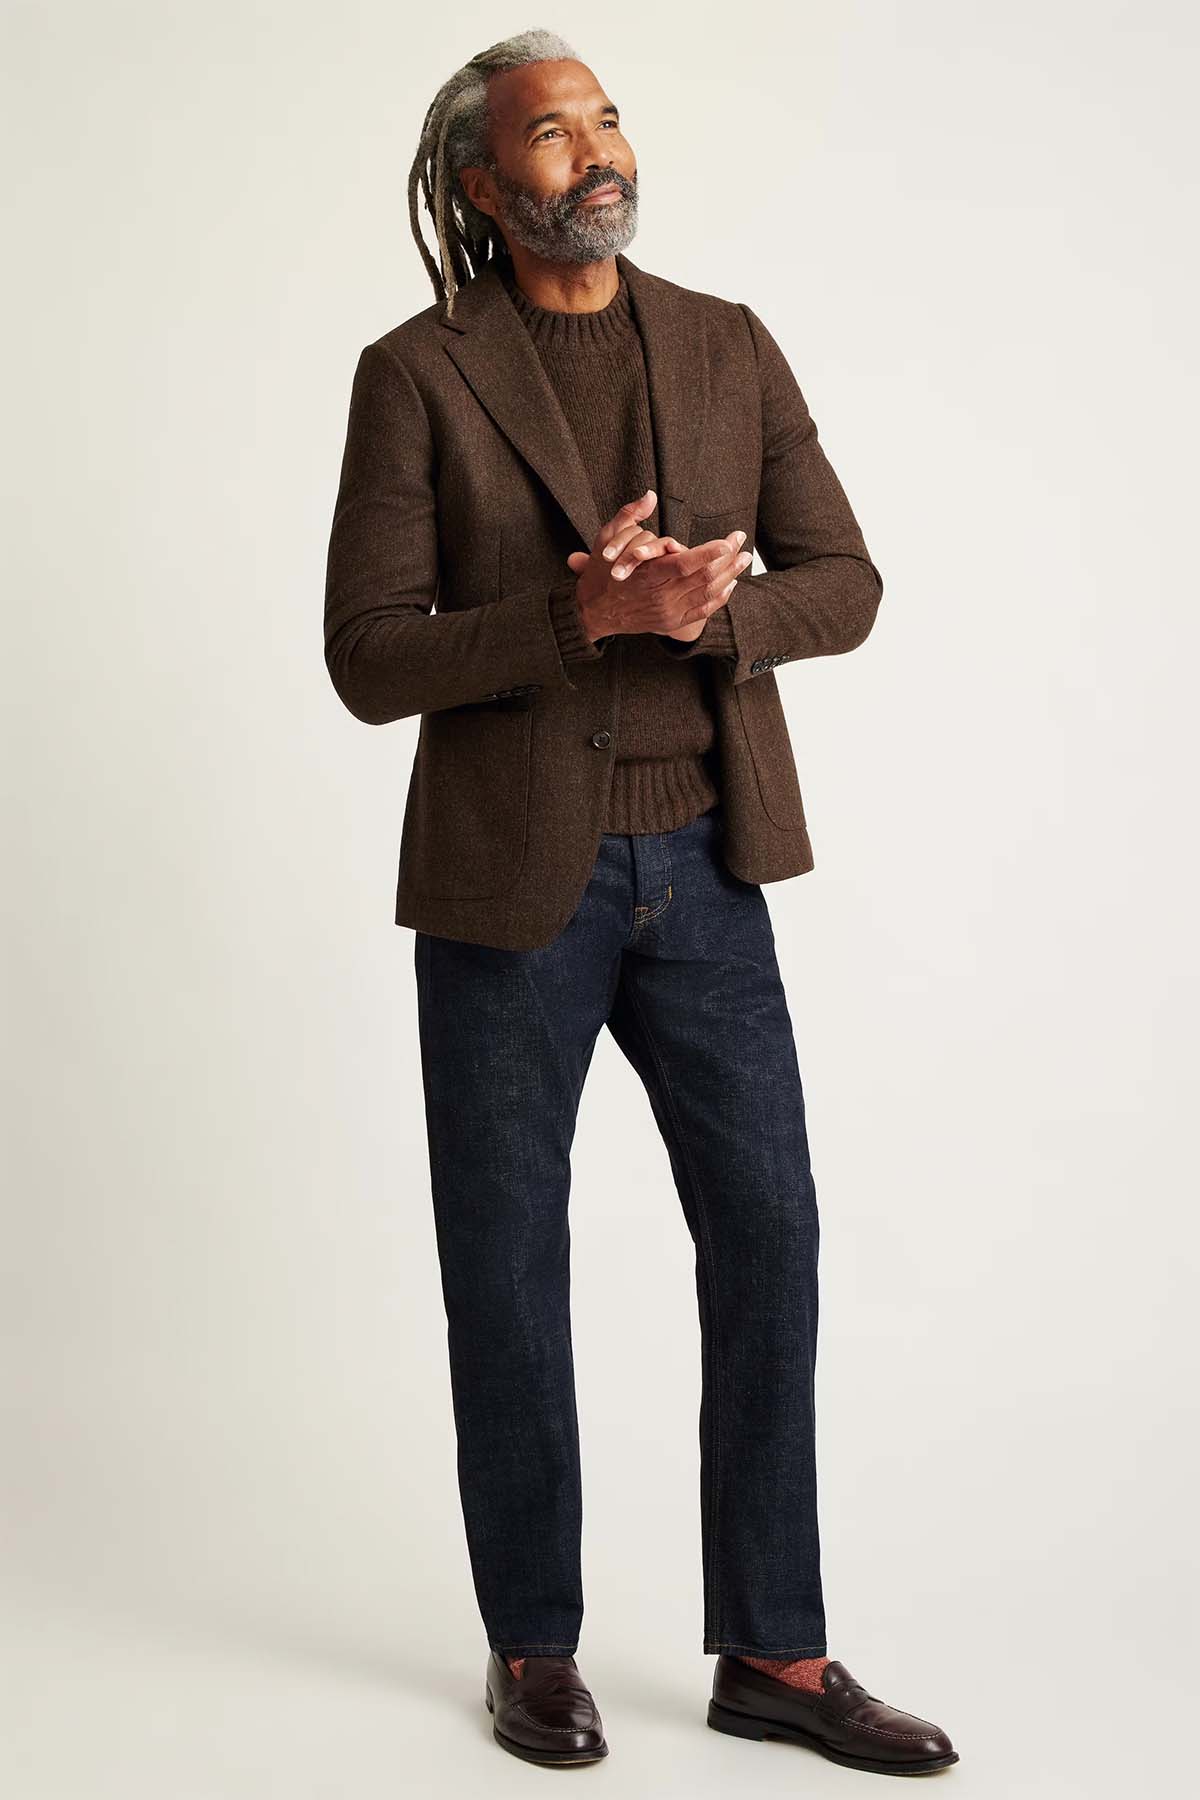 Bonobos - Jetsetter Fashion Blazer - Brown Donegal Tweed